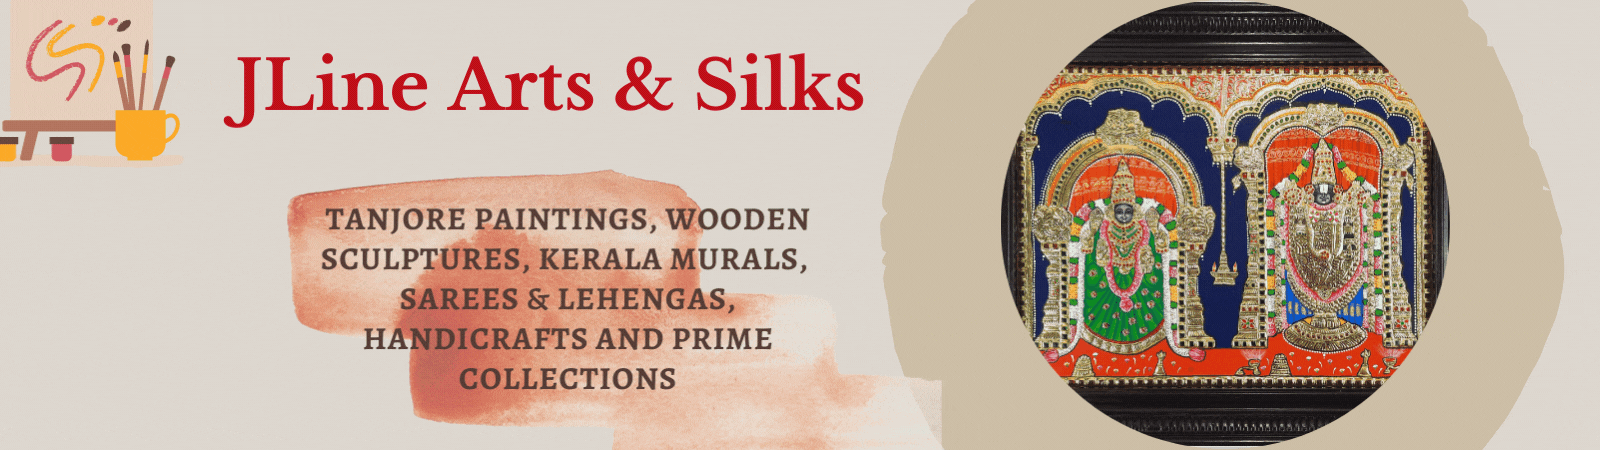 JLine Arts & Silks – Main